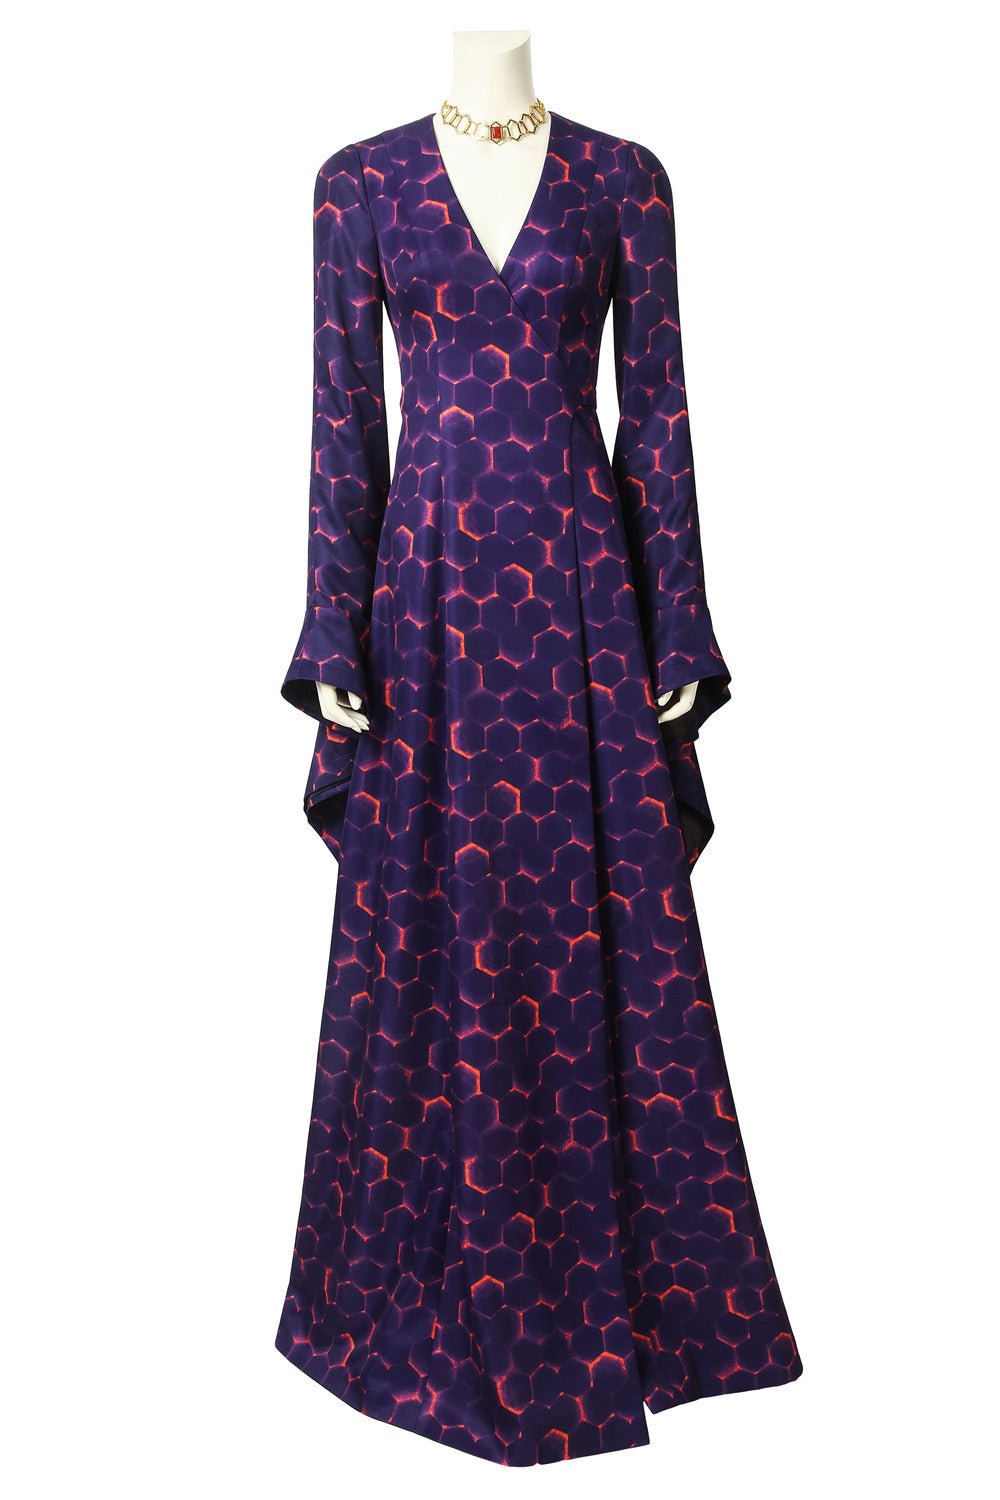 Melisandre Game of Thrones Cosplay Costume Purple Dress